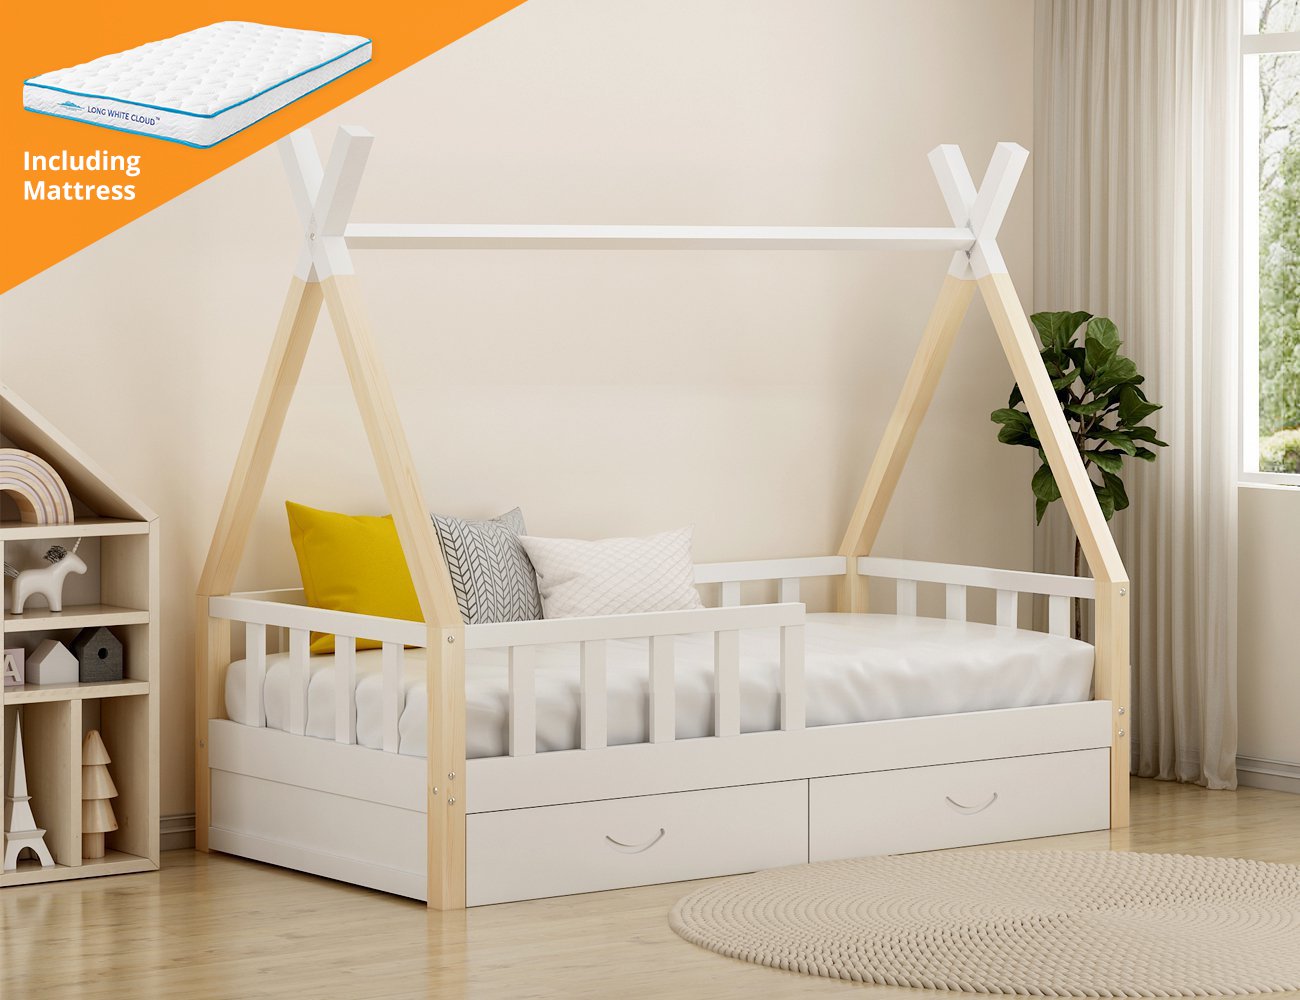 toddler bed frame for crib mattress